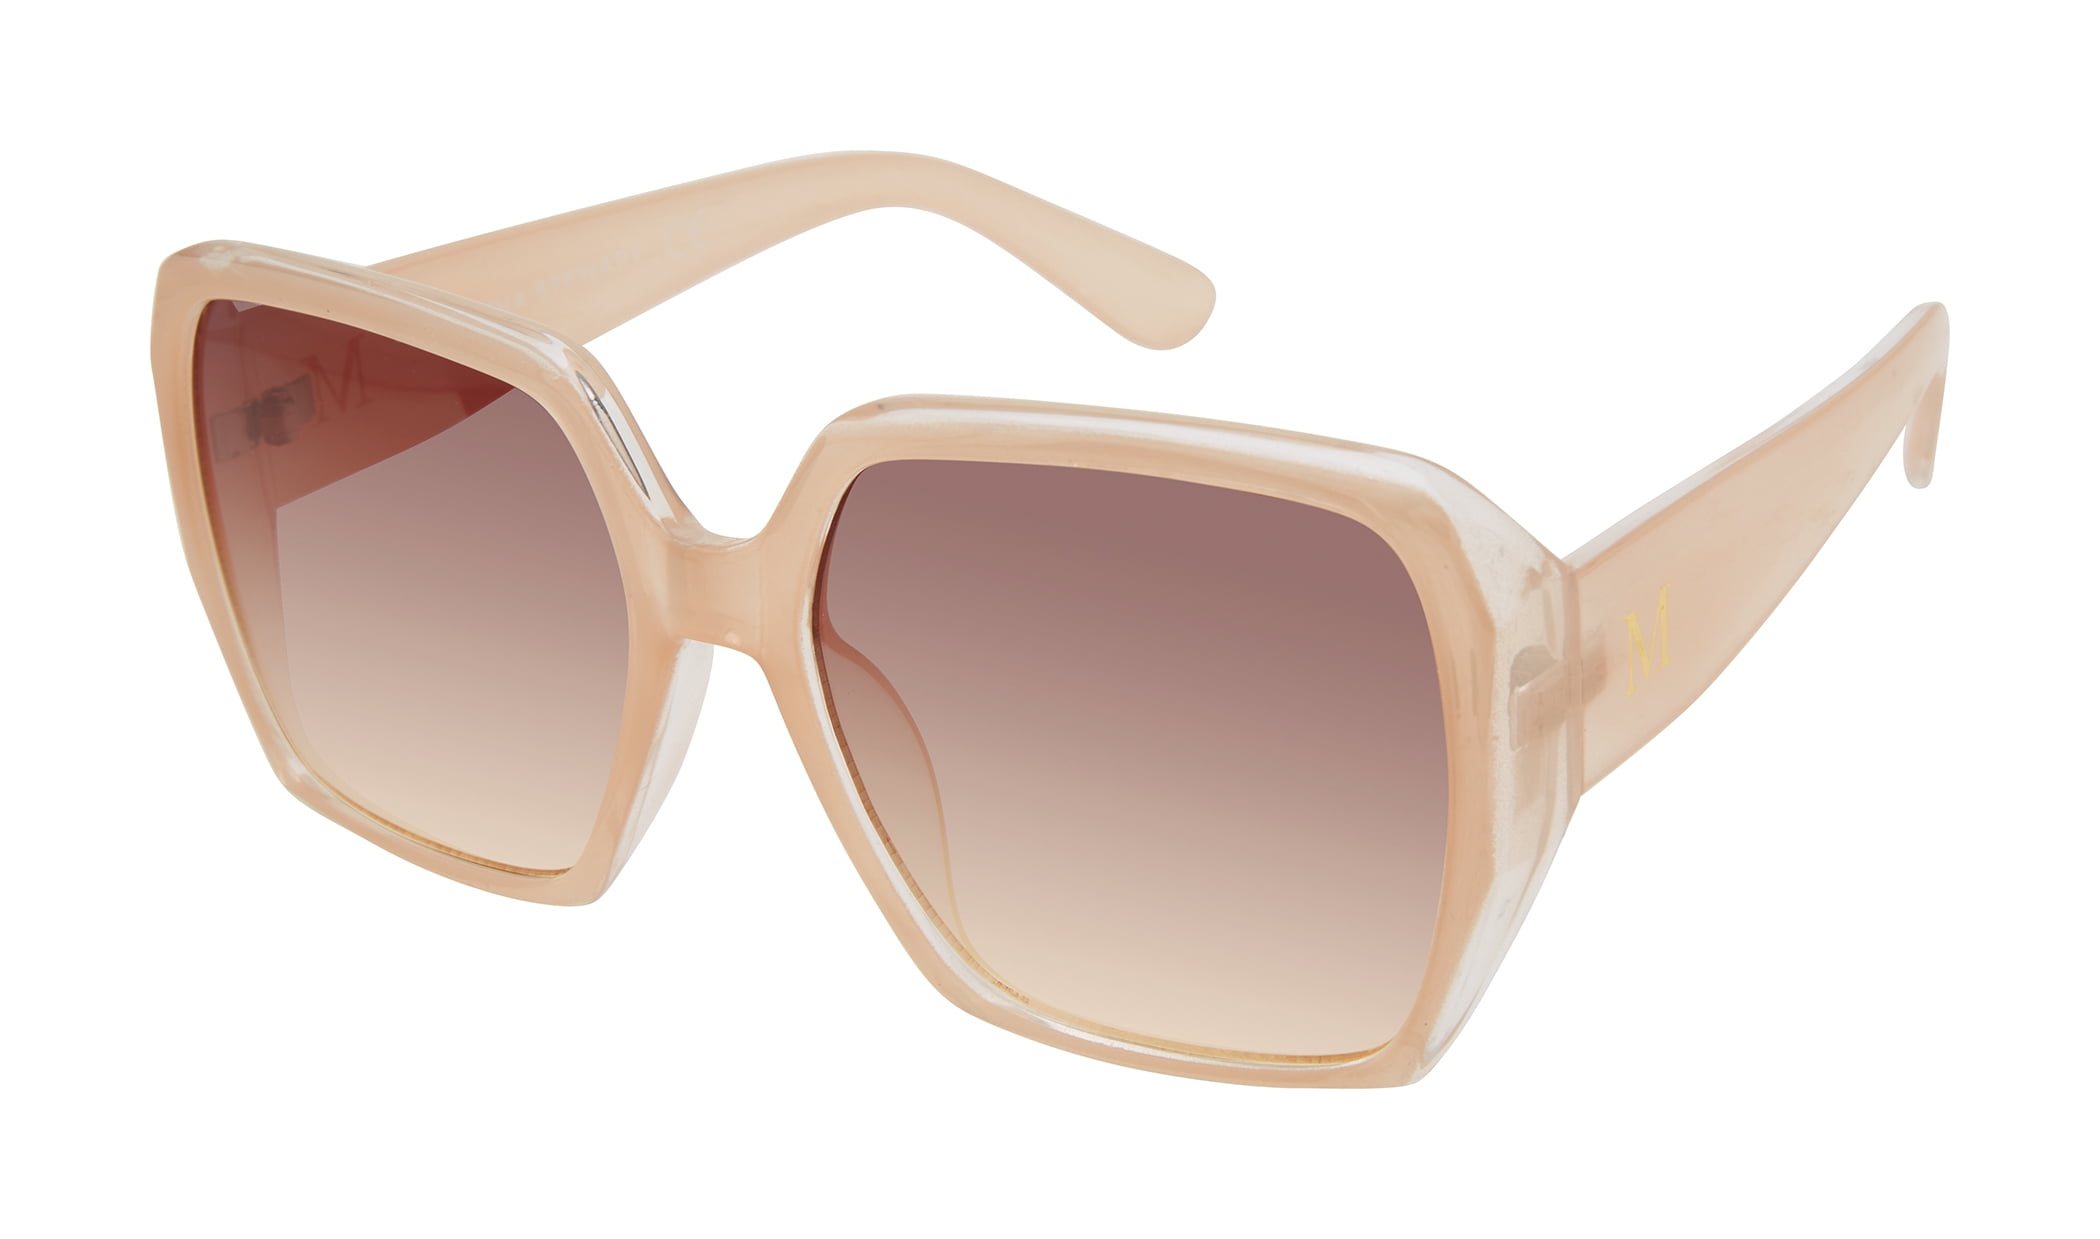 Martha Stewart MS123 Mod UV400 Protective Square Sunglasses for Women ...